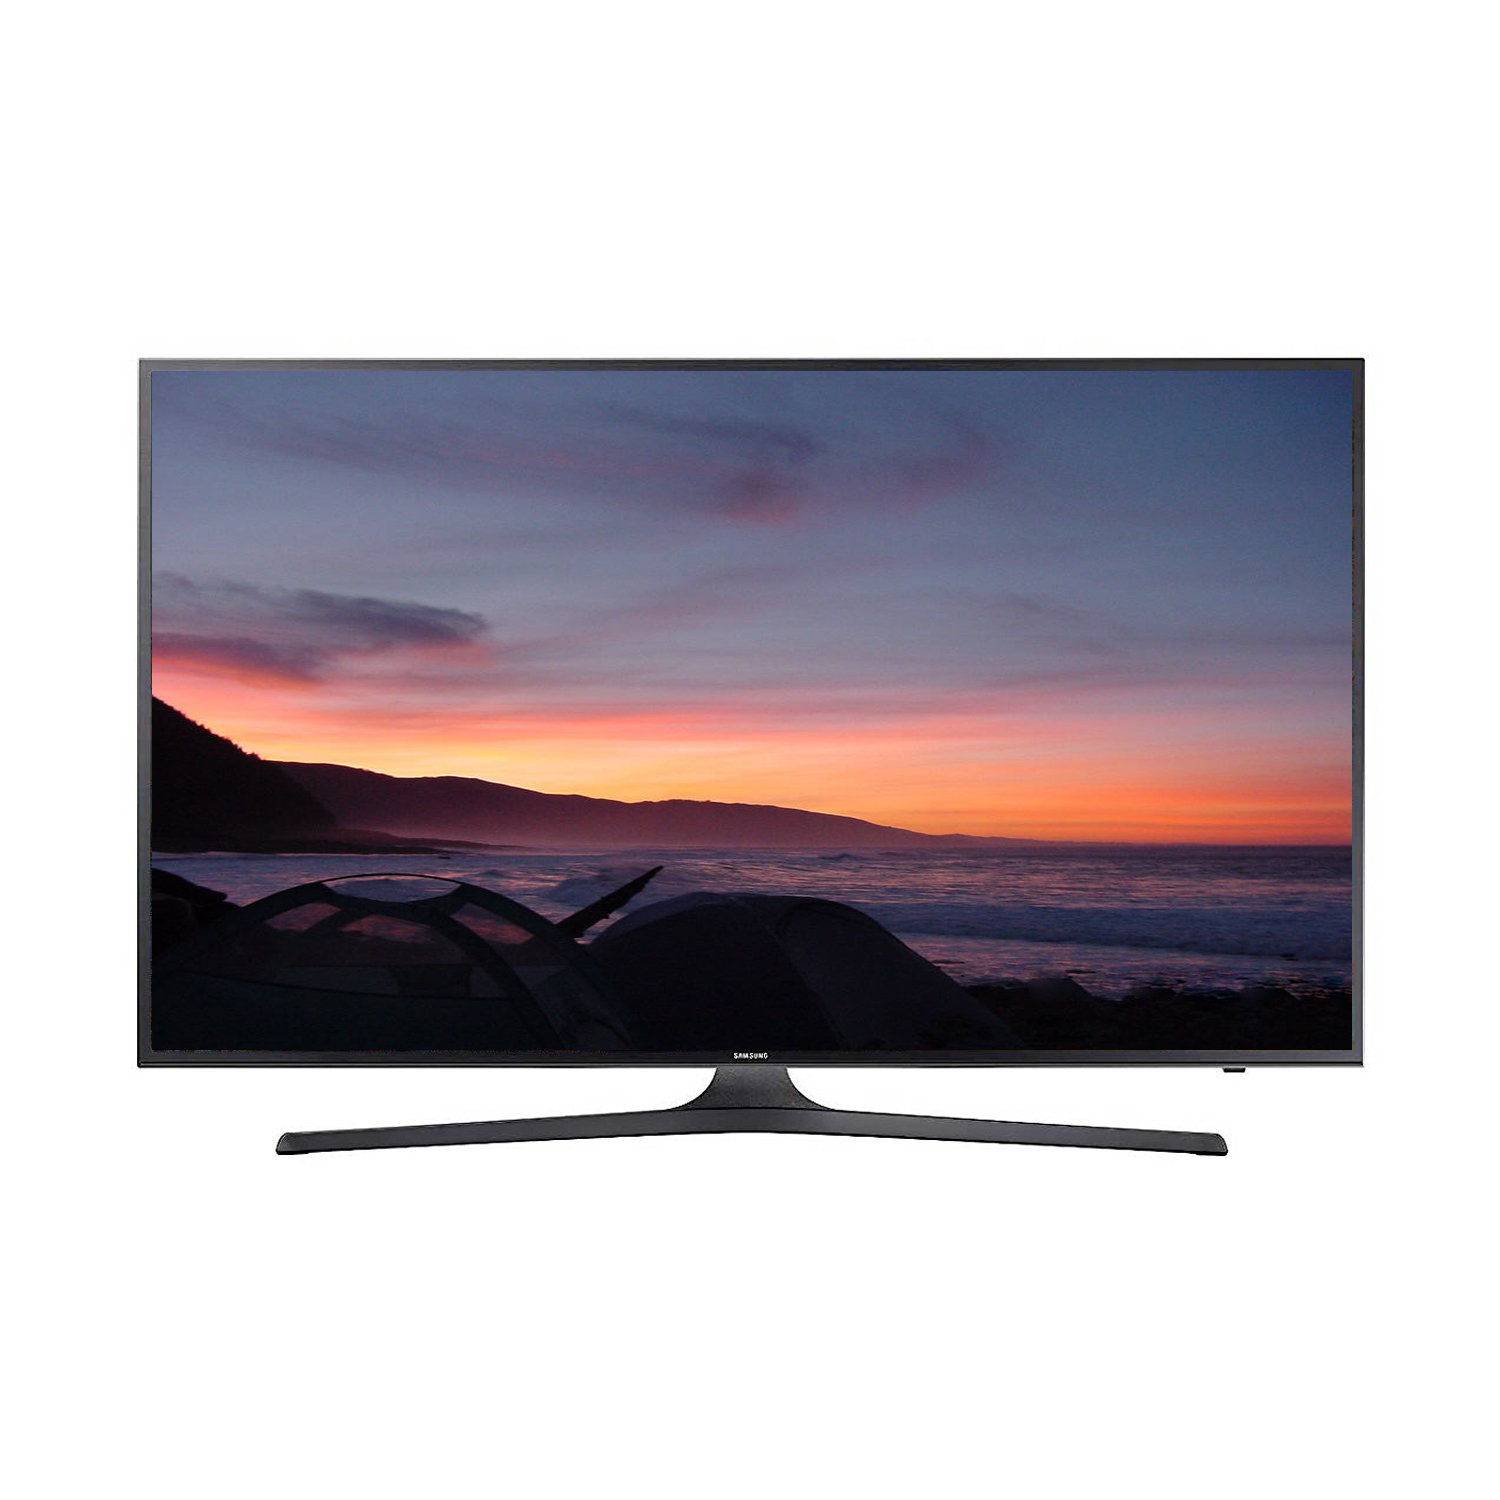 Samsung REFURBISHED40 IN. 4K SMART LED TV W/ WIFI-UN40KU6290FXZA